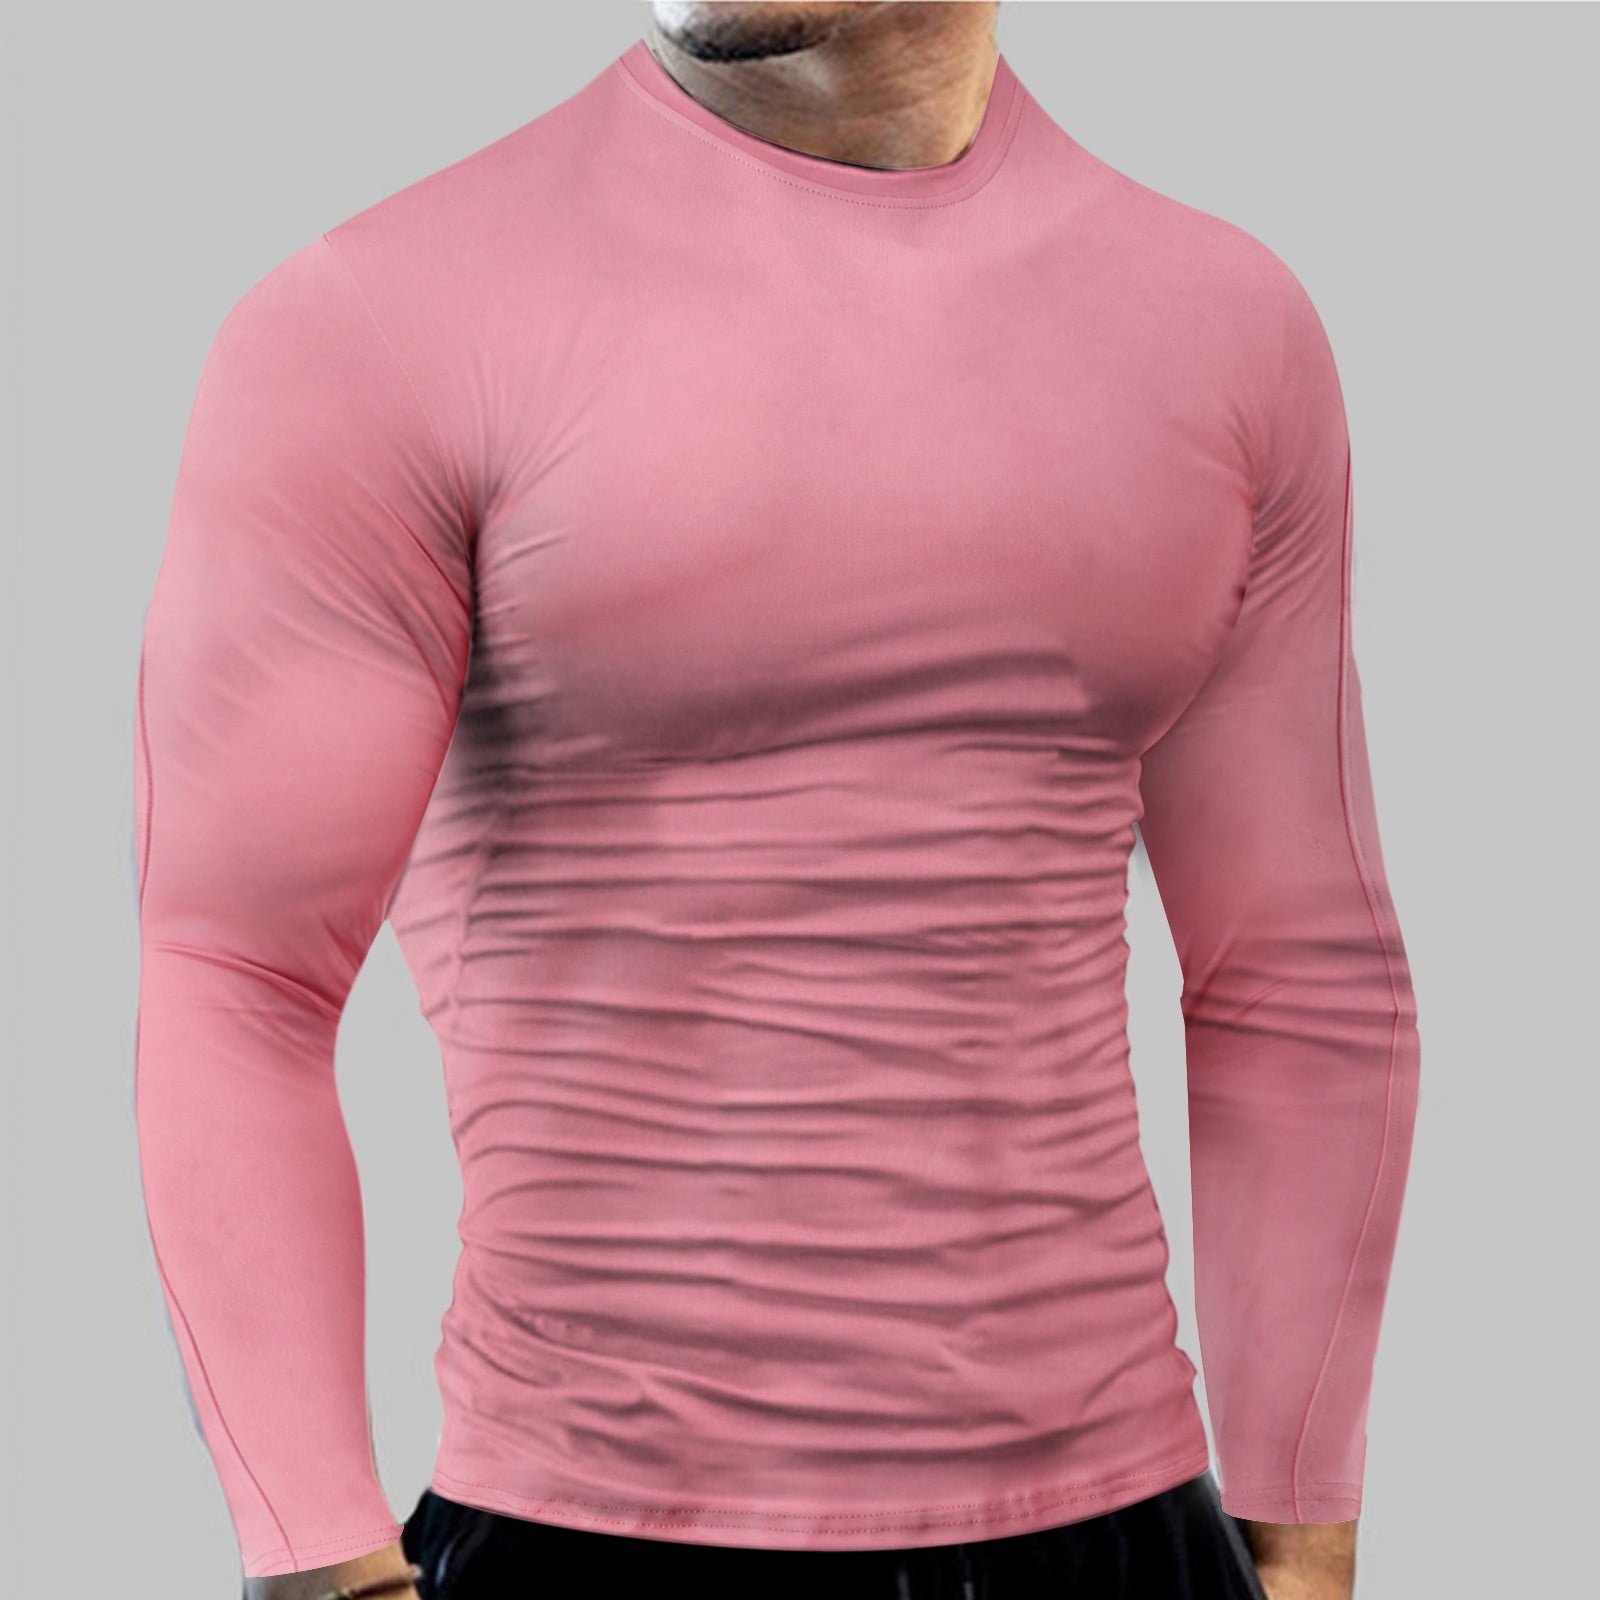 Men's Compression Shirt Running Shirt Long Sleeve Sweatshirt